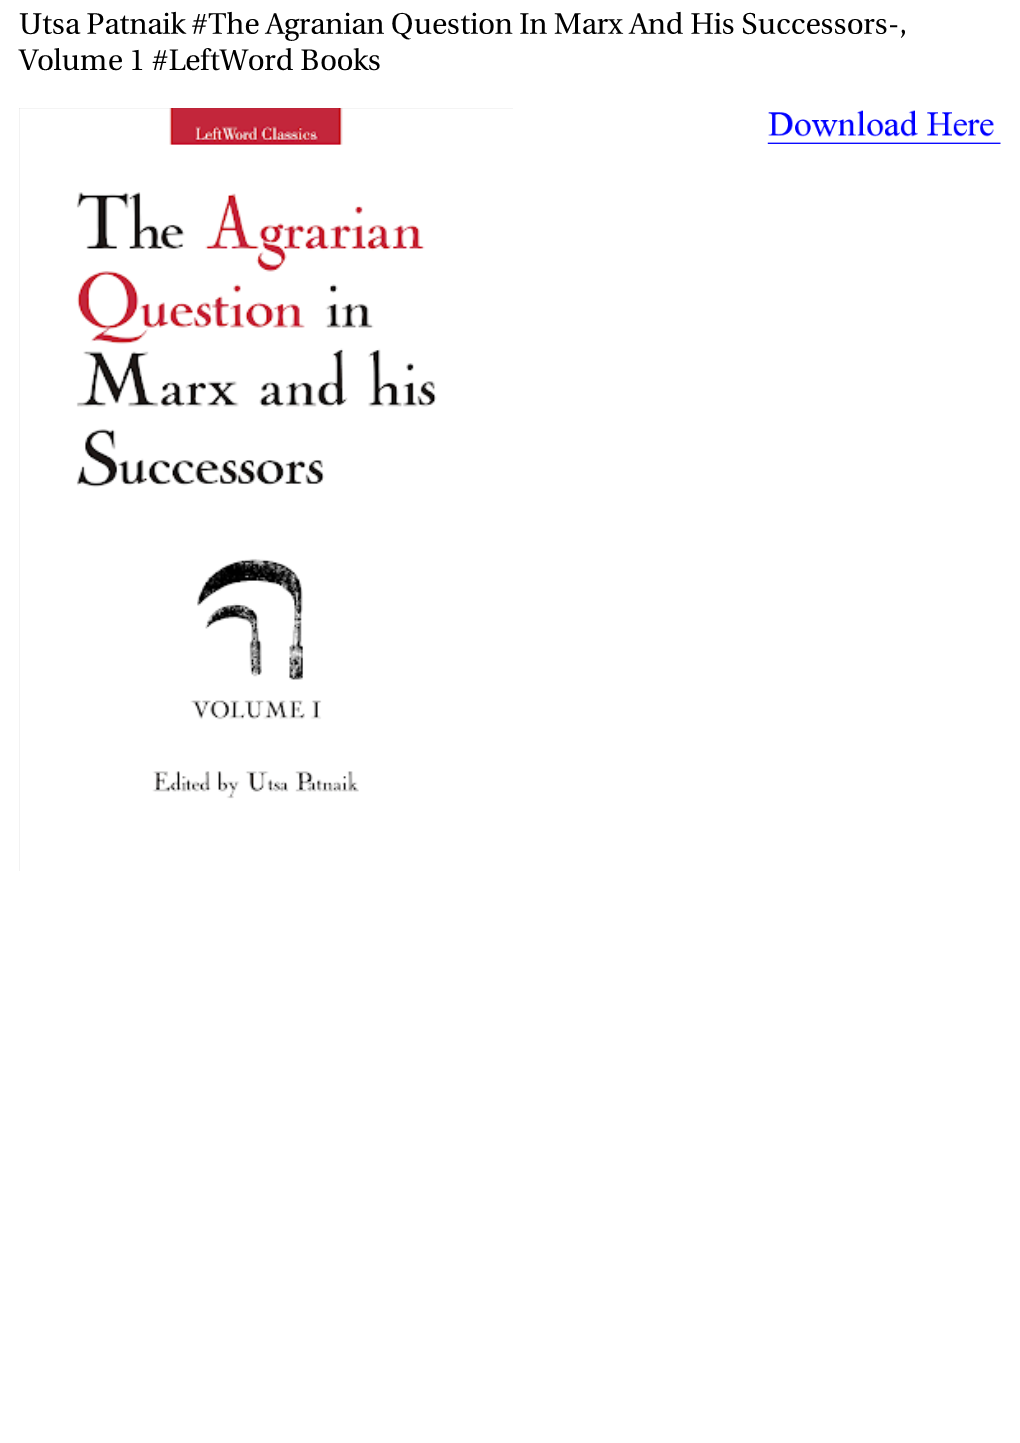 Utsa Patnaik #The Agranian Question in Marx and His Successors-, Volume 1 #Leftword Books ^ Utsa Patnaik, the Agrarian Question in Marx and His Successors, Vol